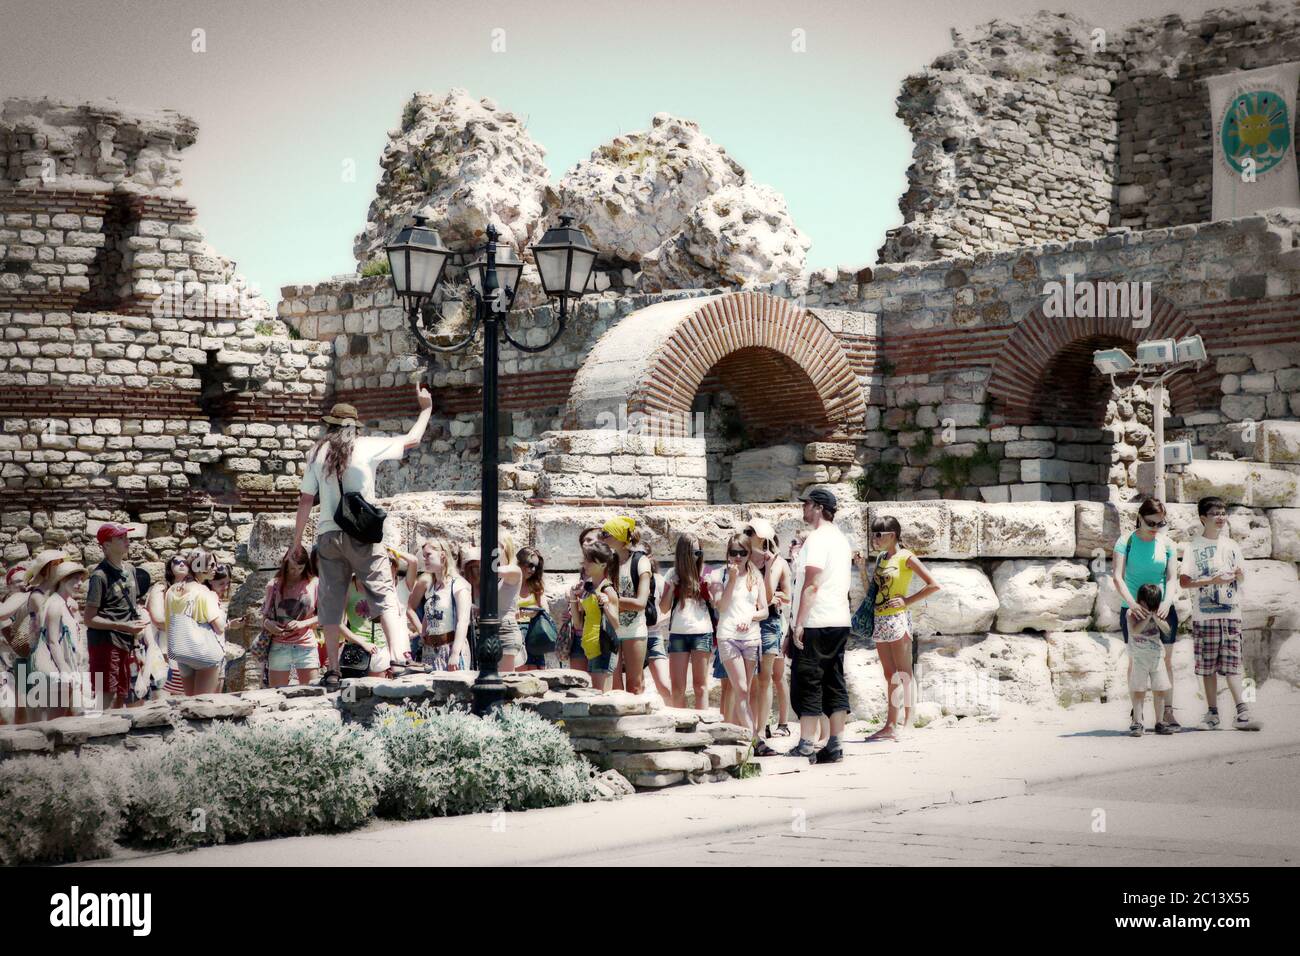 Nesebar, Bulgaria - August 29: People visit Old Town on August 29, 2014 in Nesebar, Bulgaria. Nesebar in 1956 was declared as mu Stock Photo